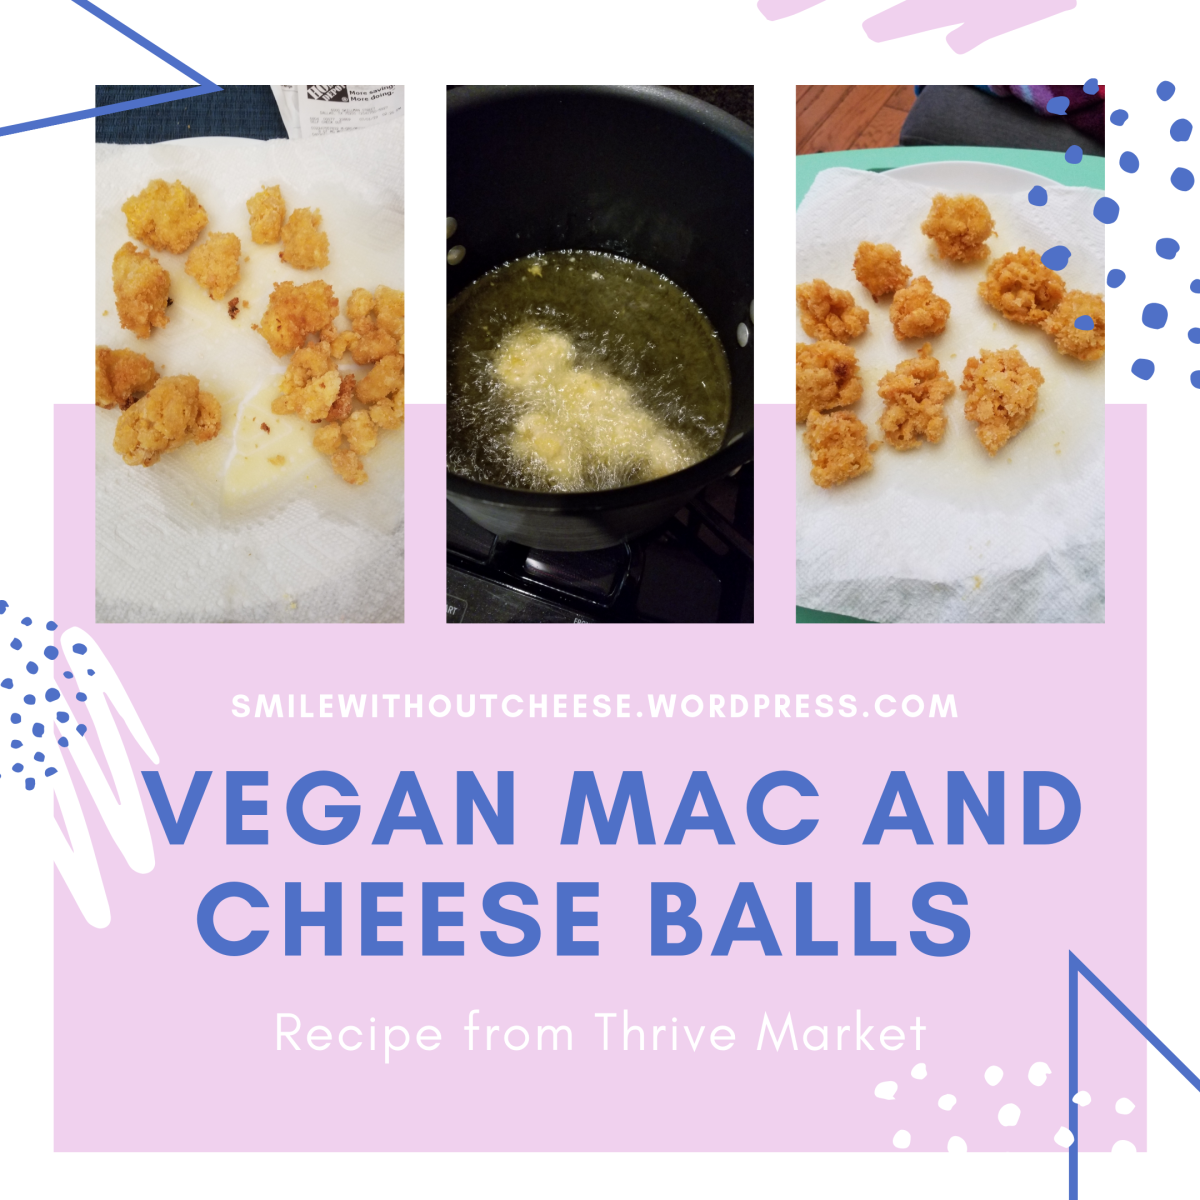 Vegan Mac and Cheese Balls Recipe from Thrive Market